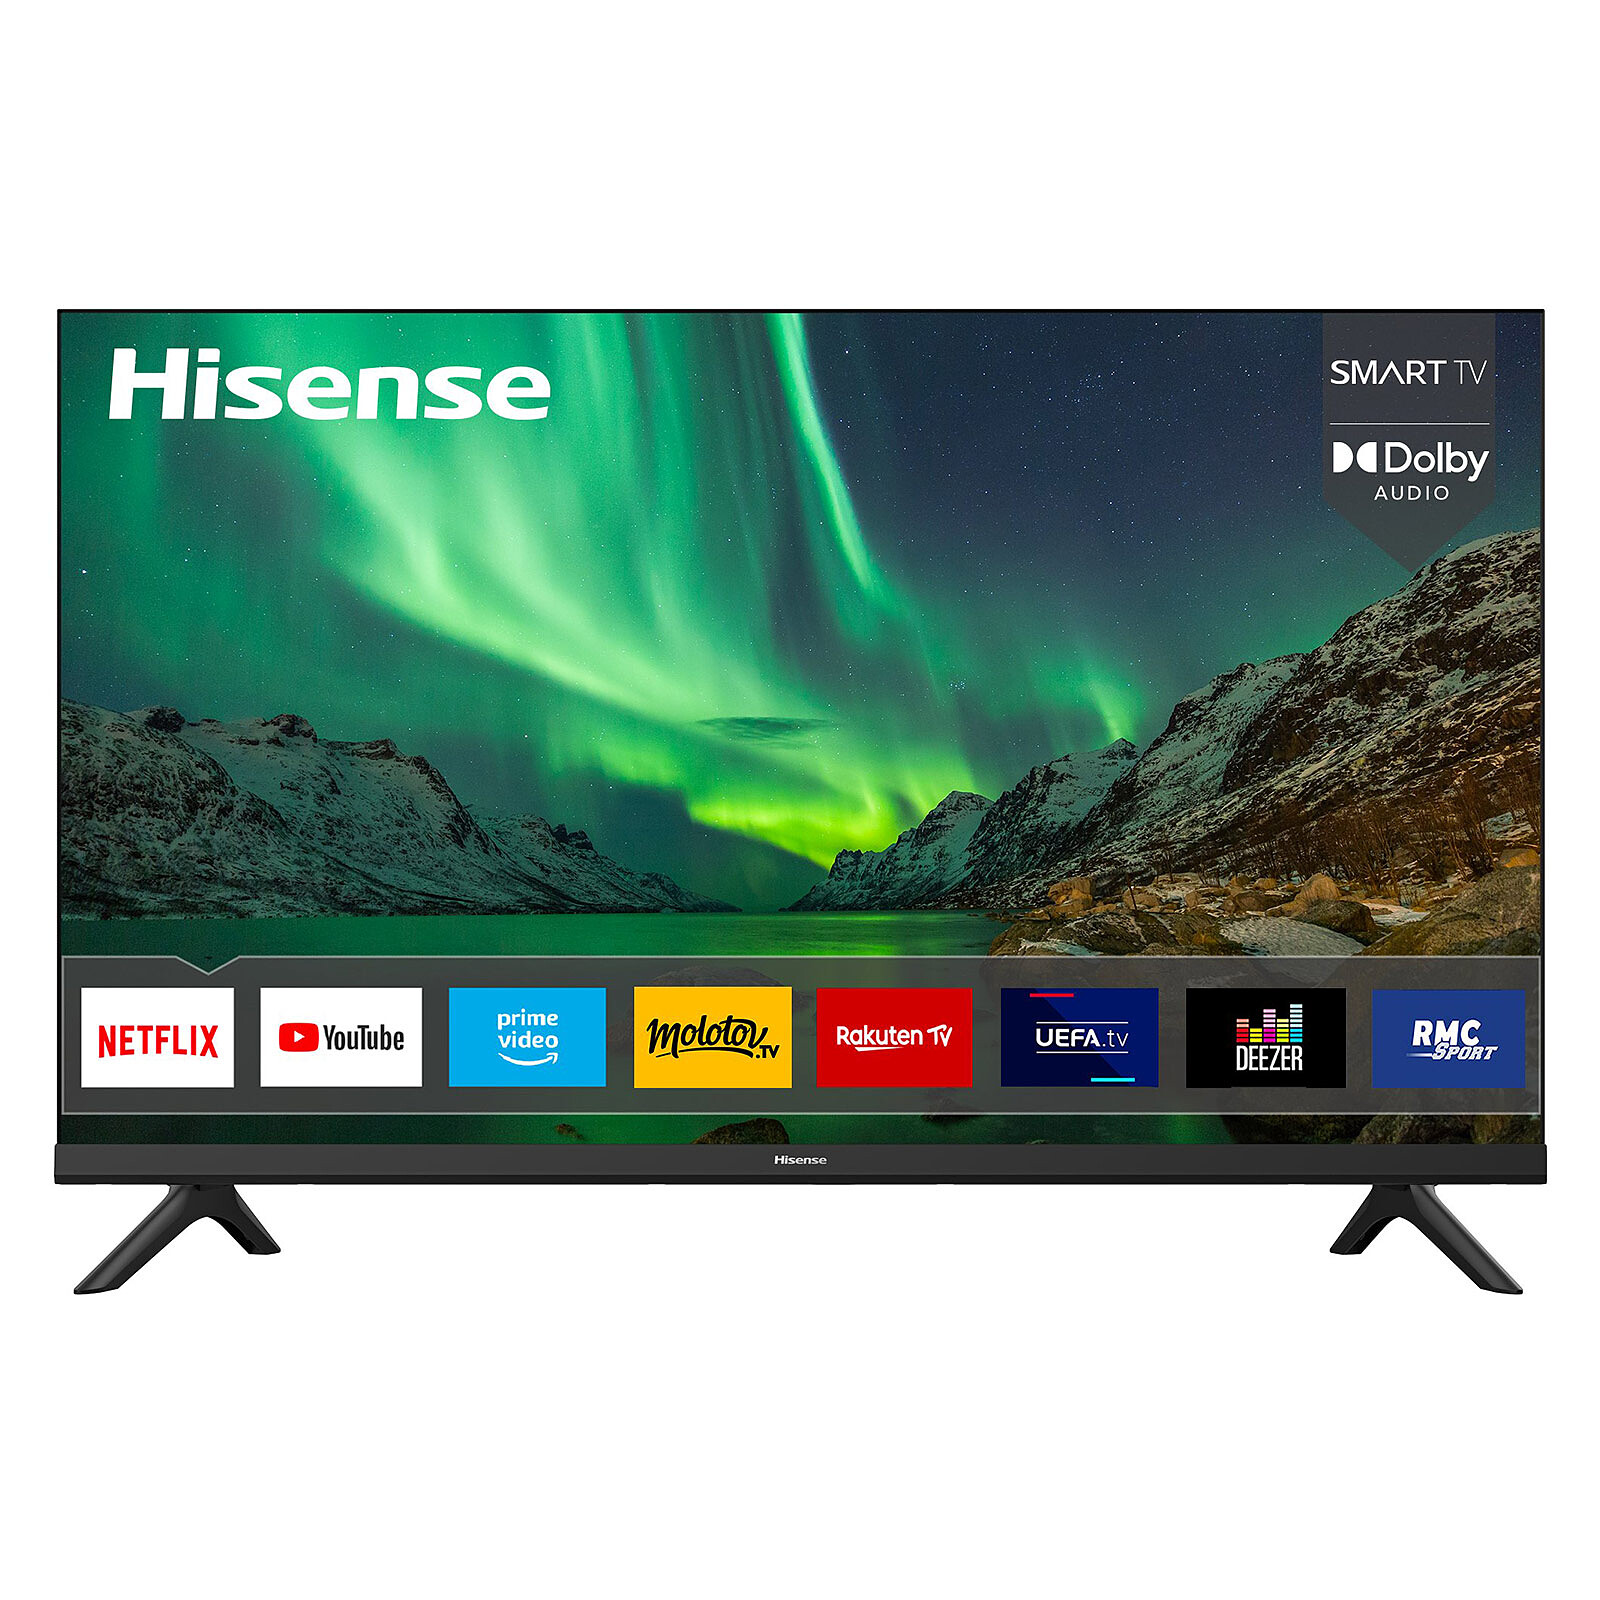 Hisense 32A45GV TV Review - Consumer Reports